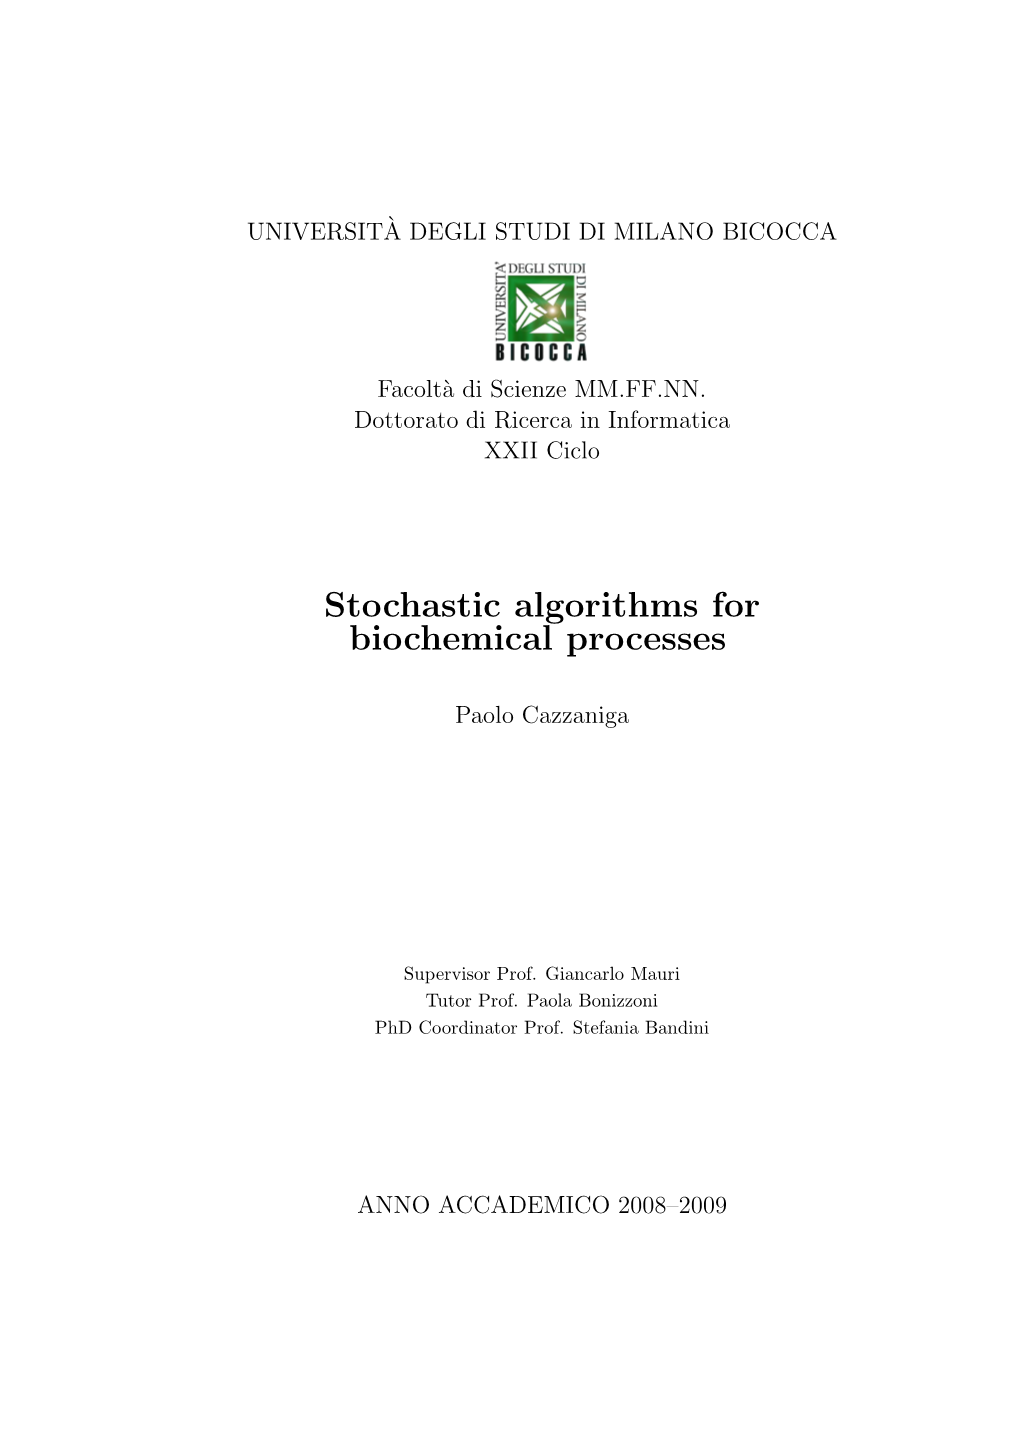 Stochastic Algorithms for Biochemical Processes